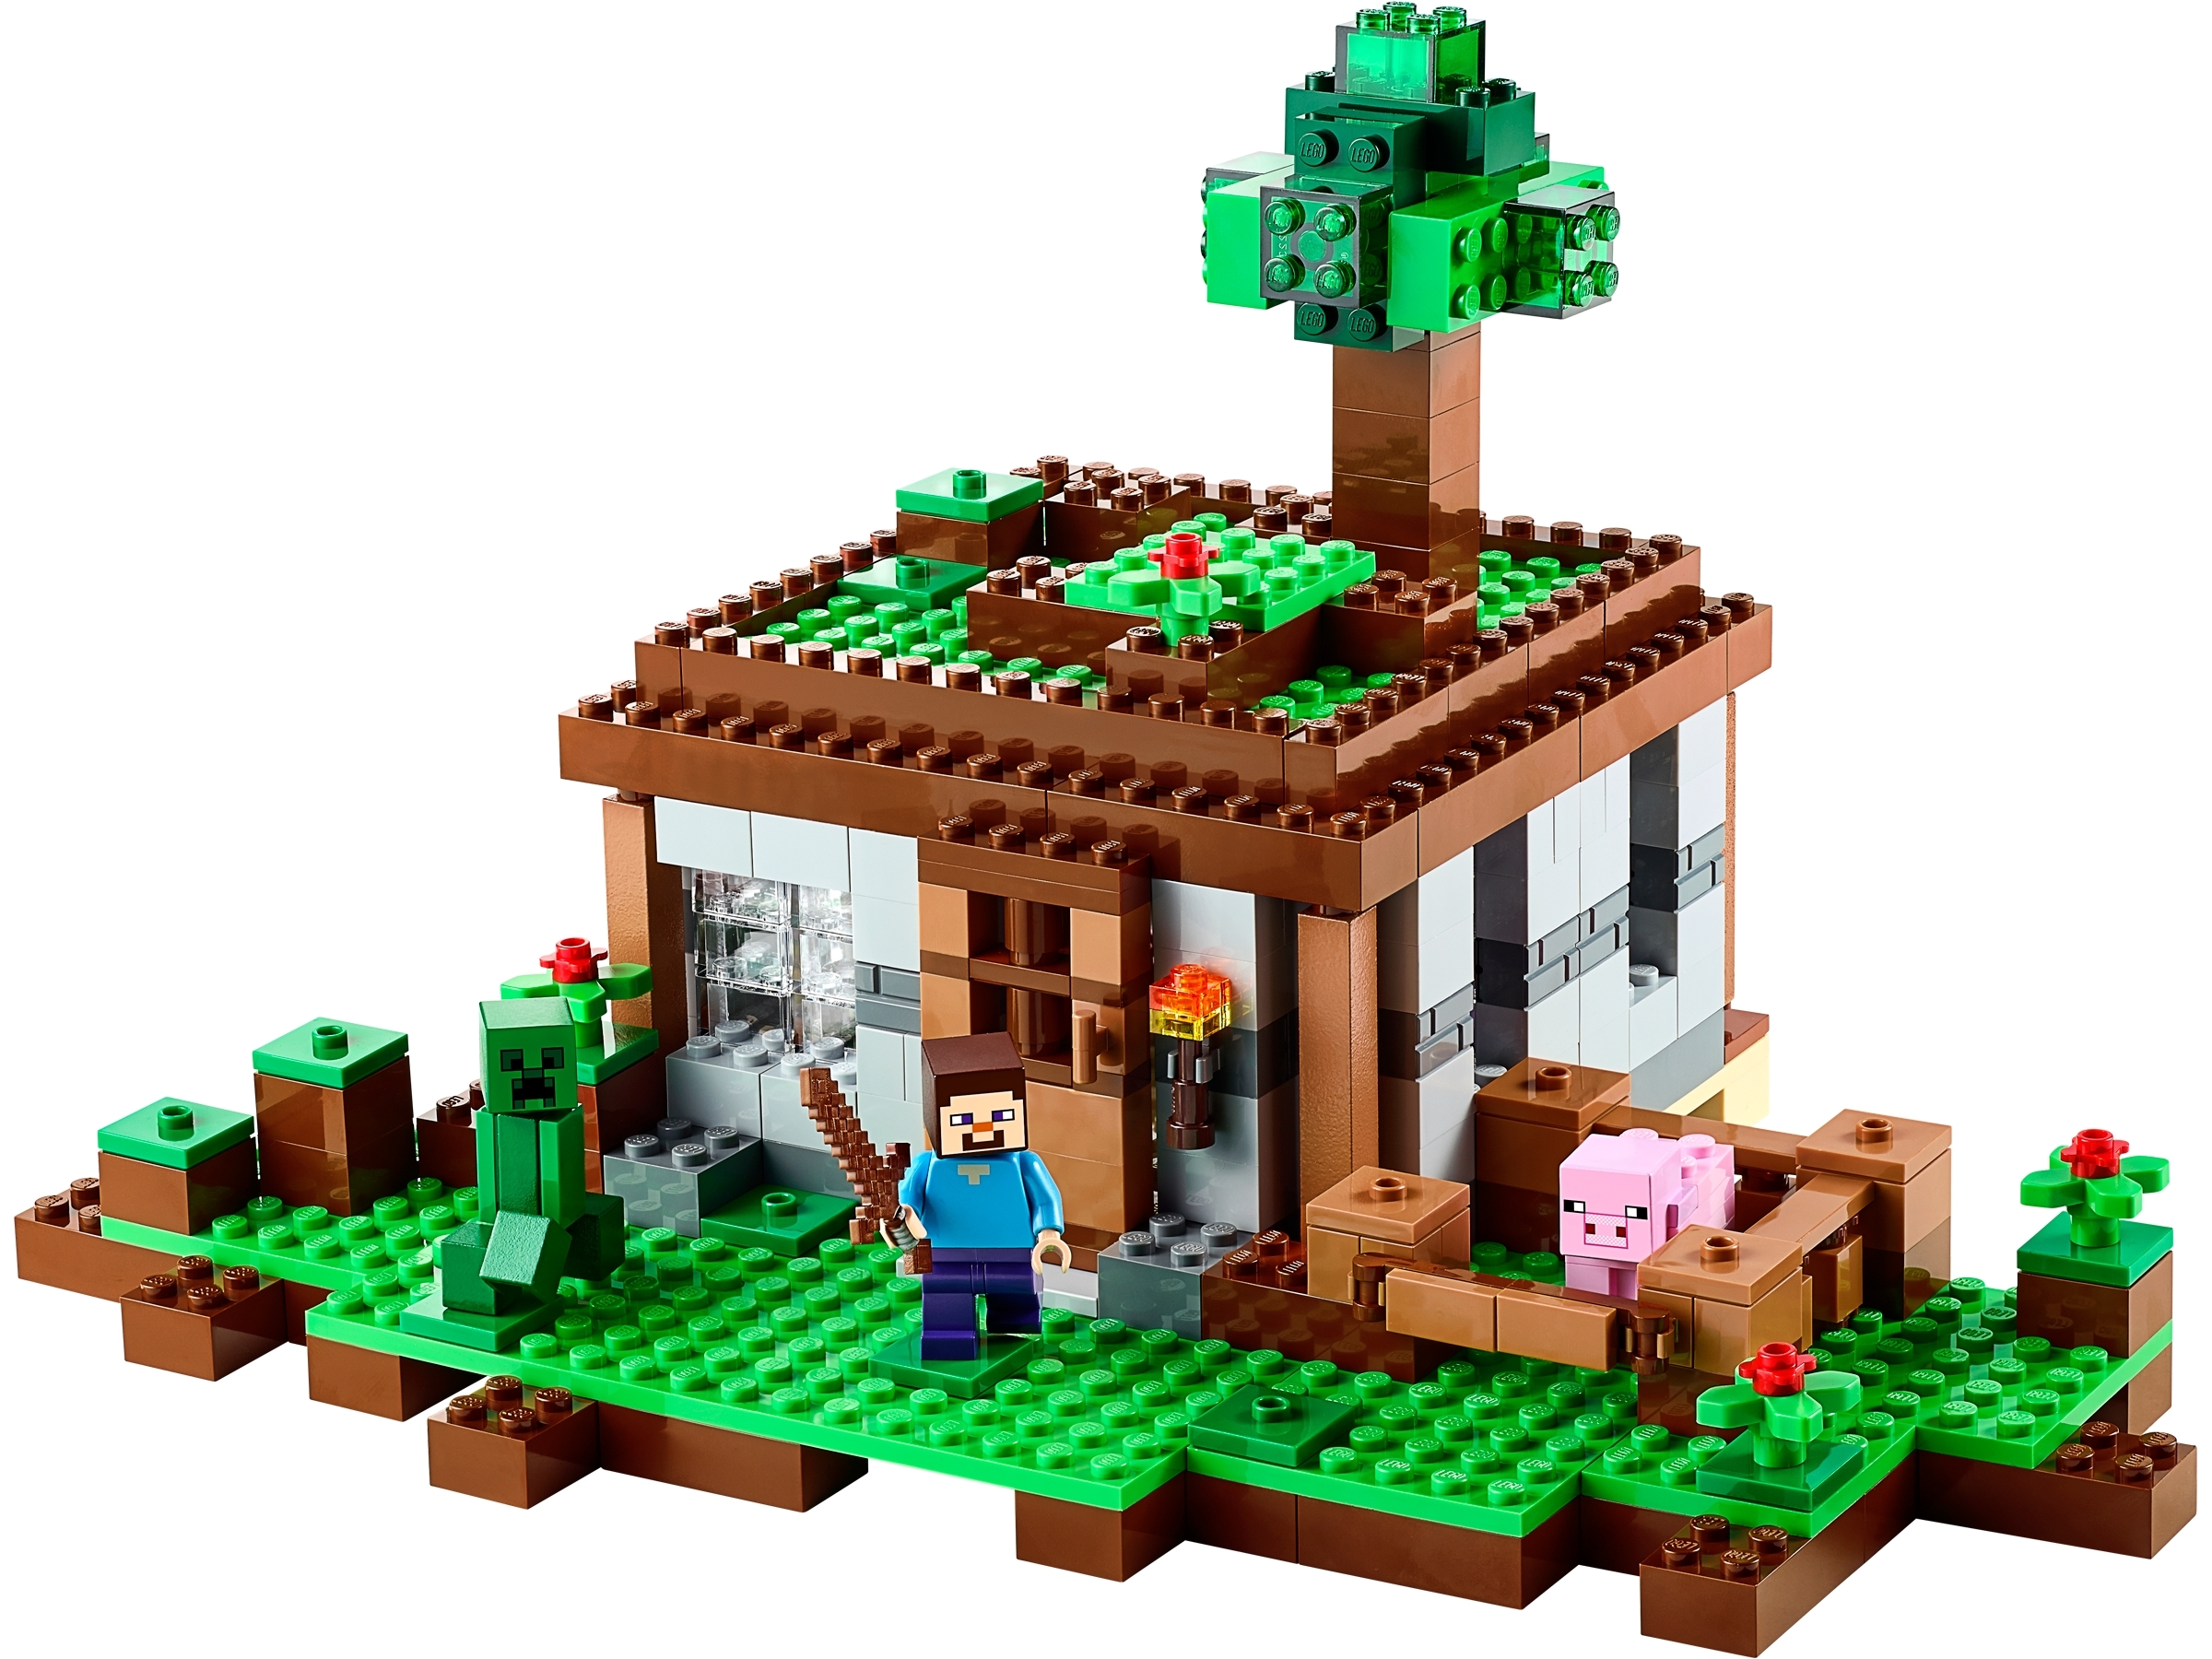 lego minecraft tree